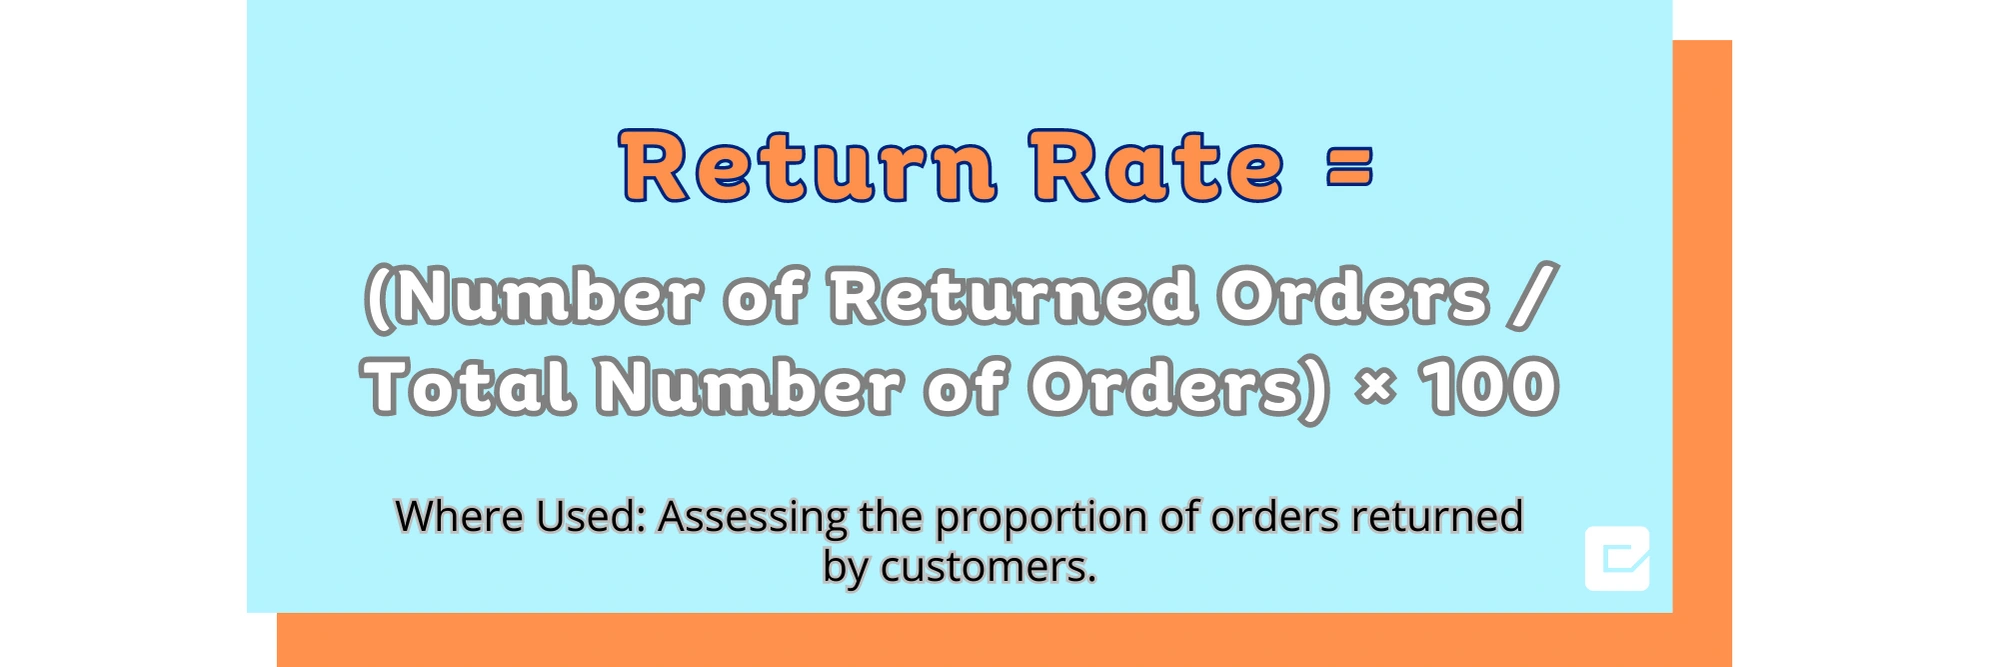 Return Rate in Amazon KPI metrics